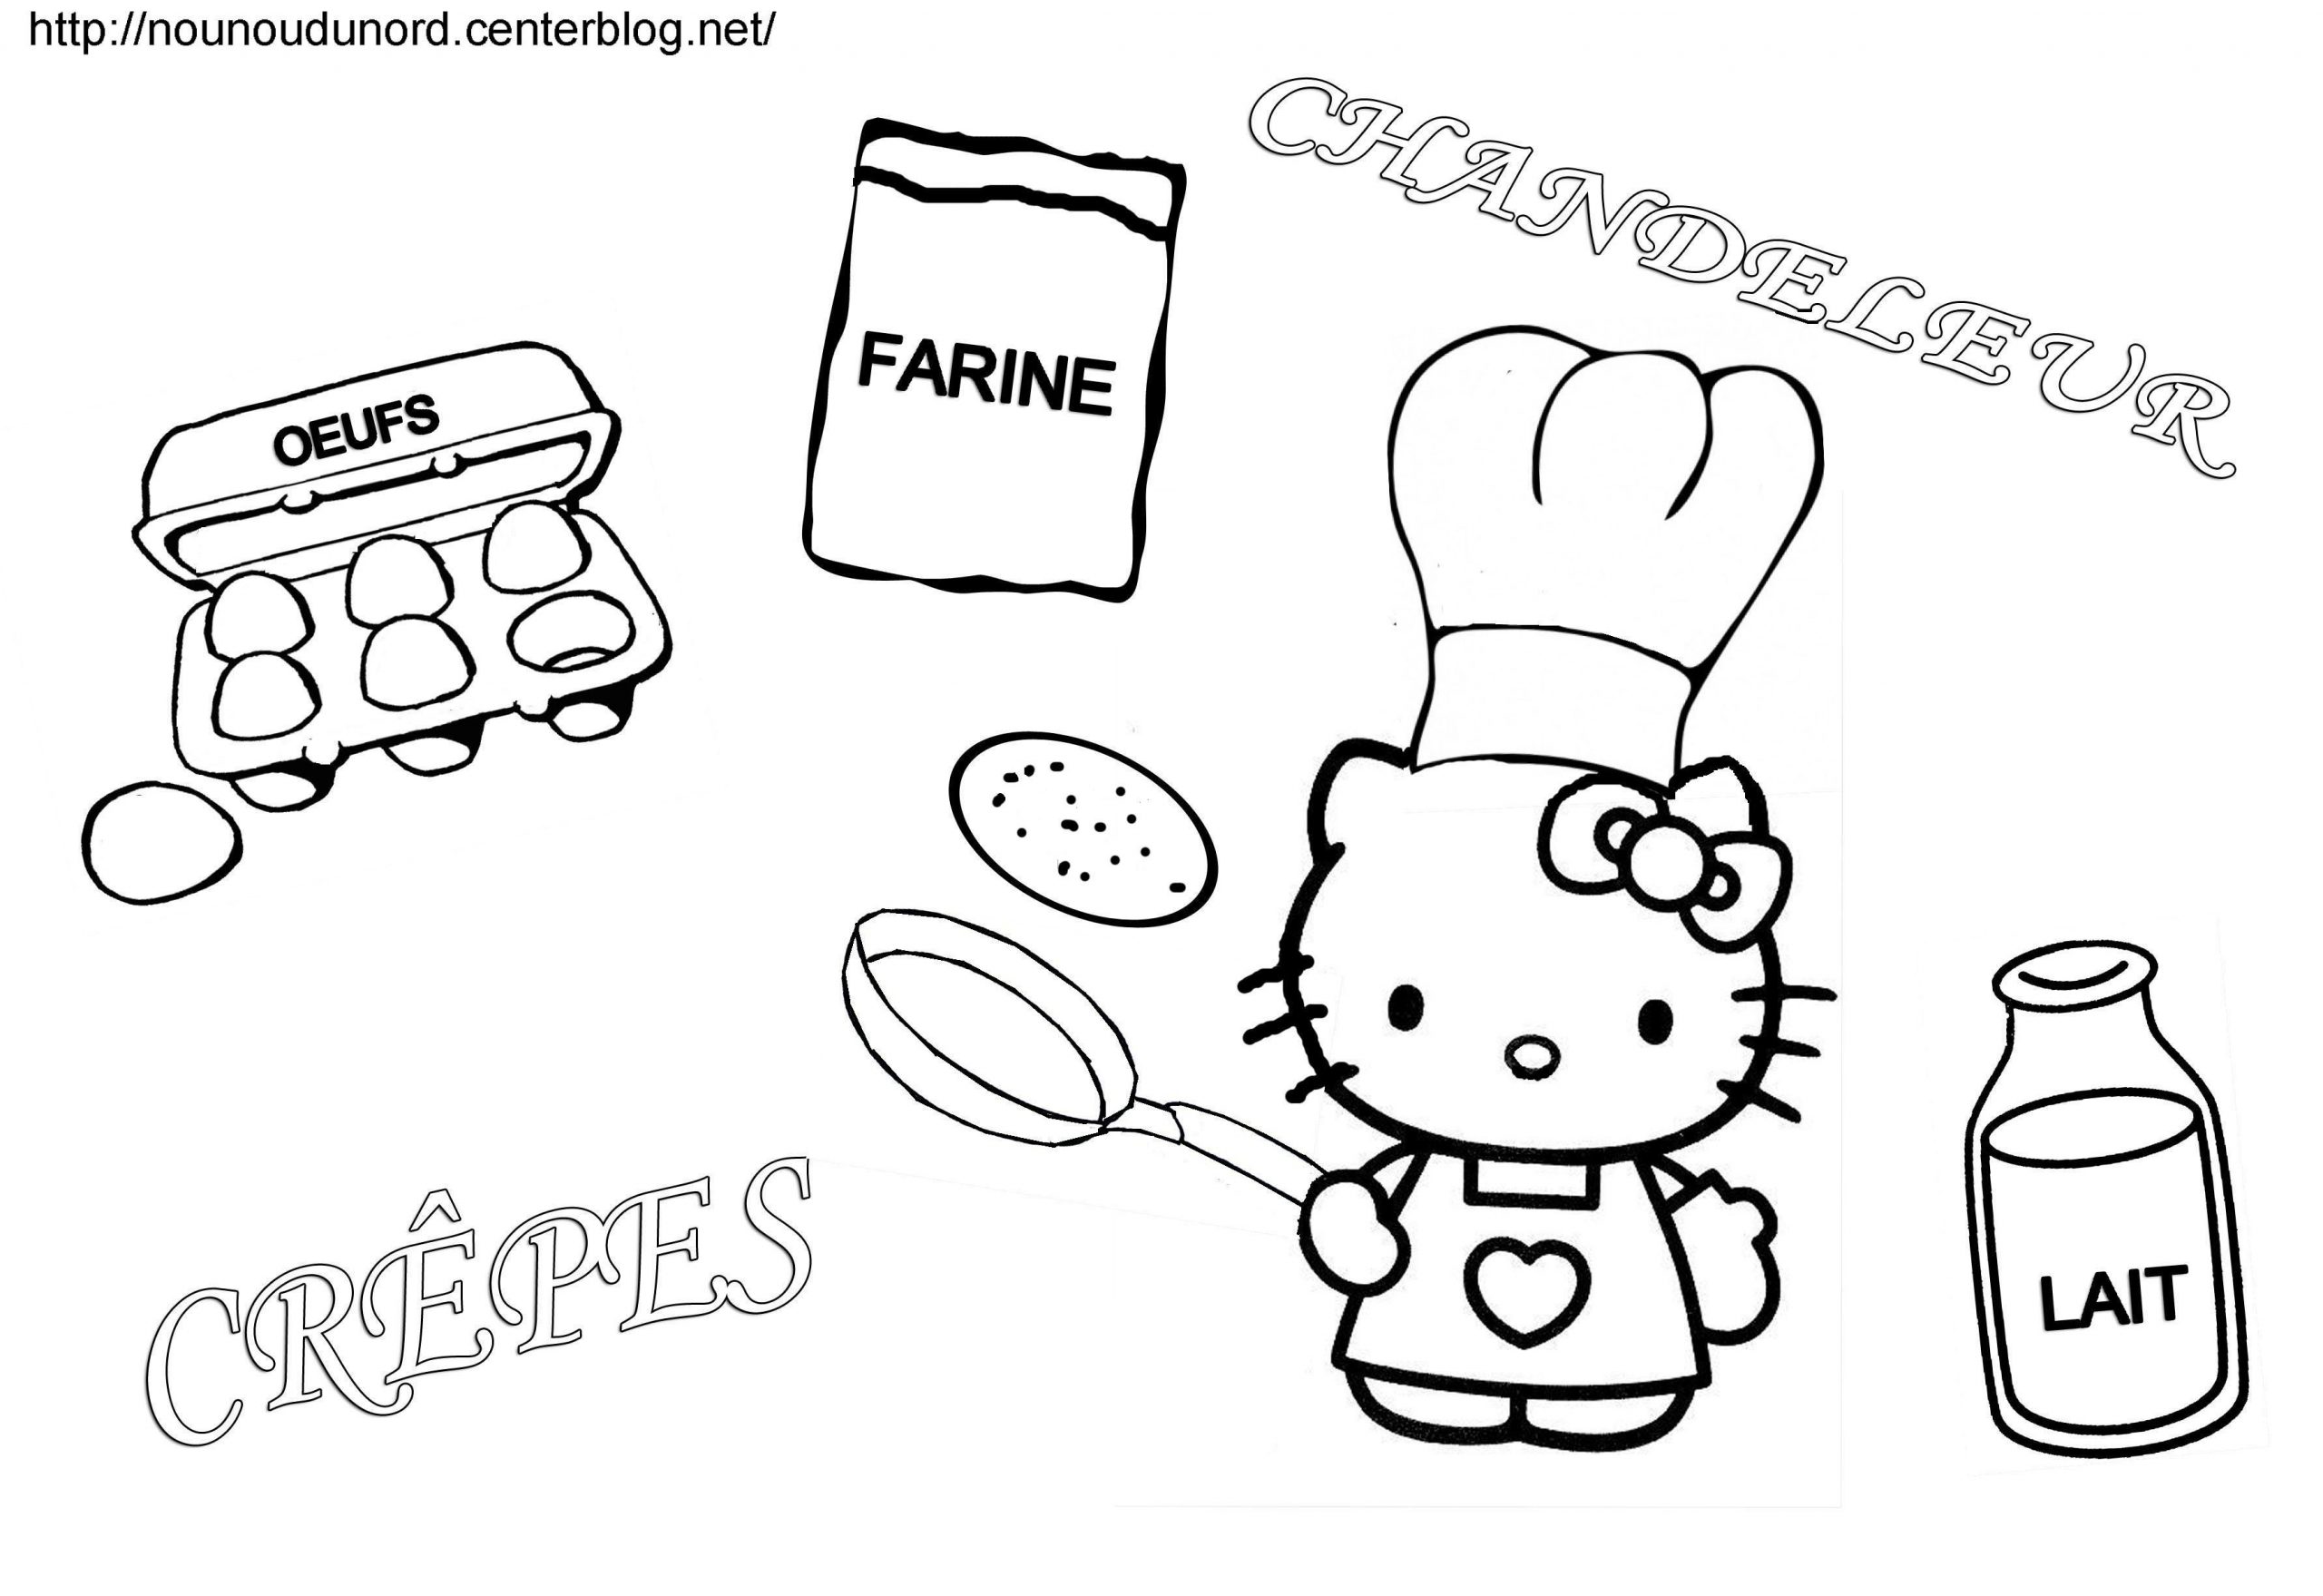 Coloriage Chandeleur Hello Kitty Dessiné Par Nounoudunord avec Dessin Animé De Hello Kitty En Français